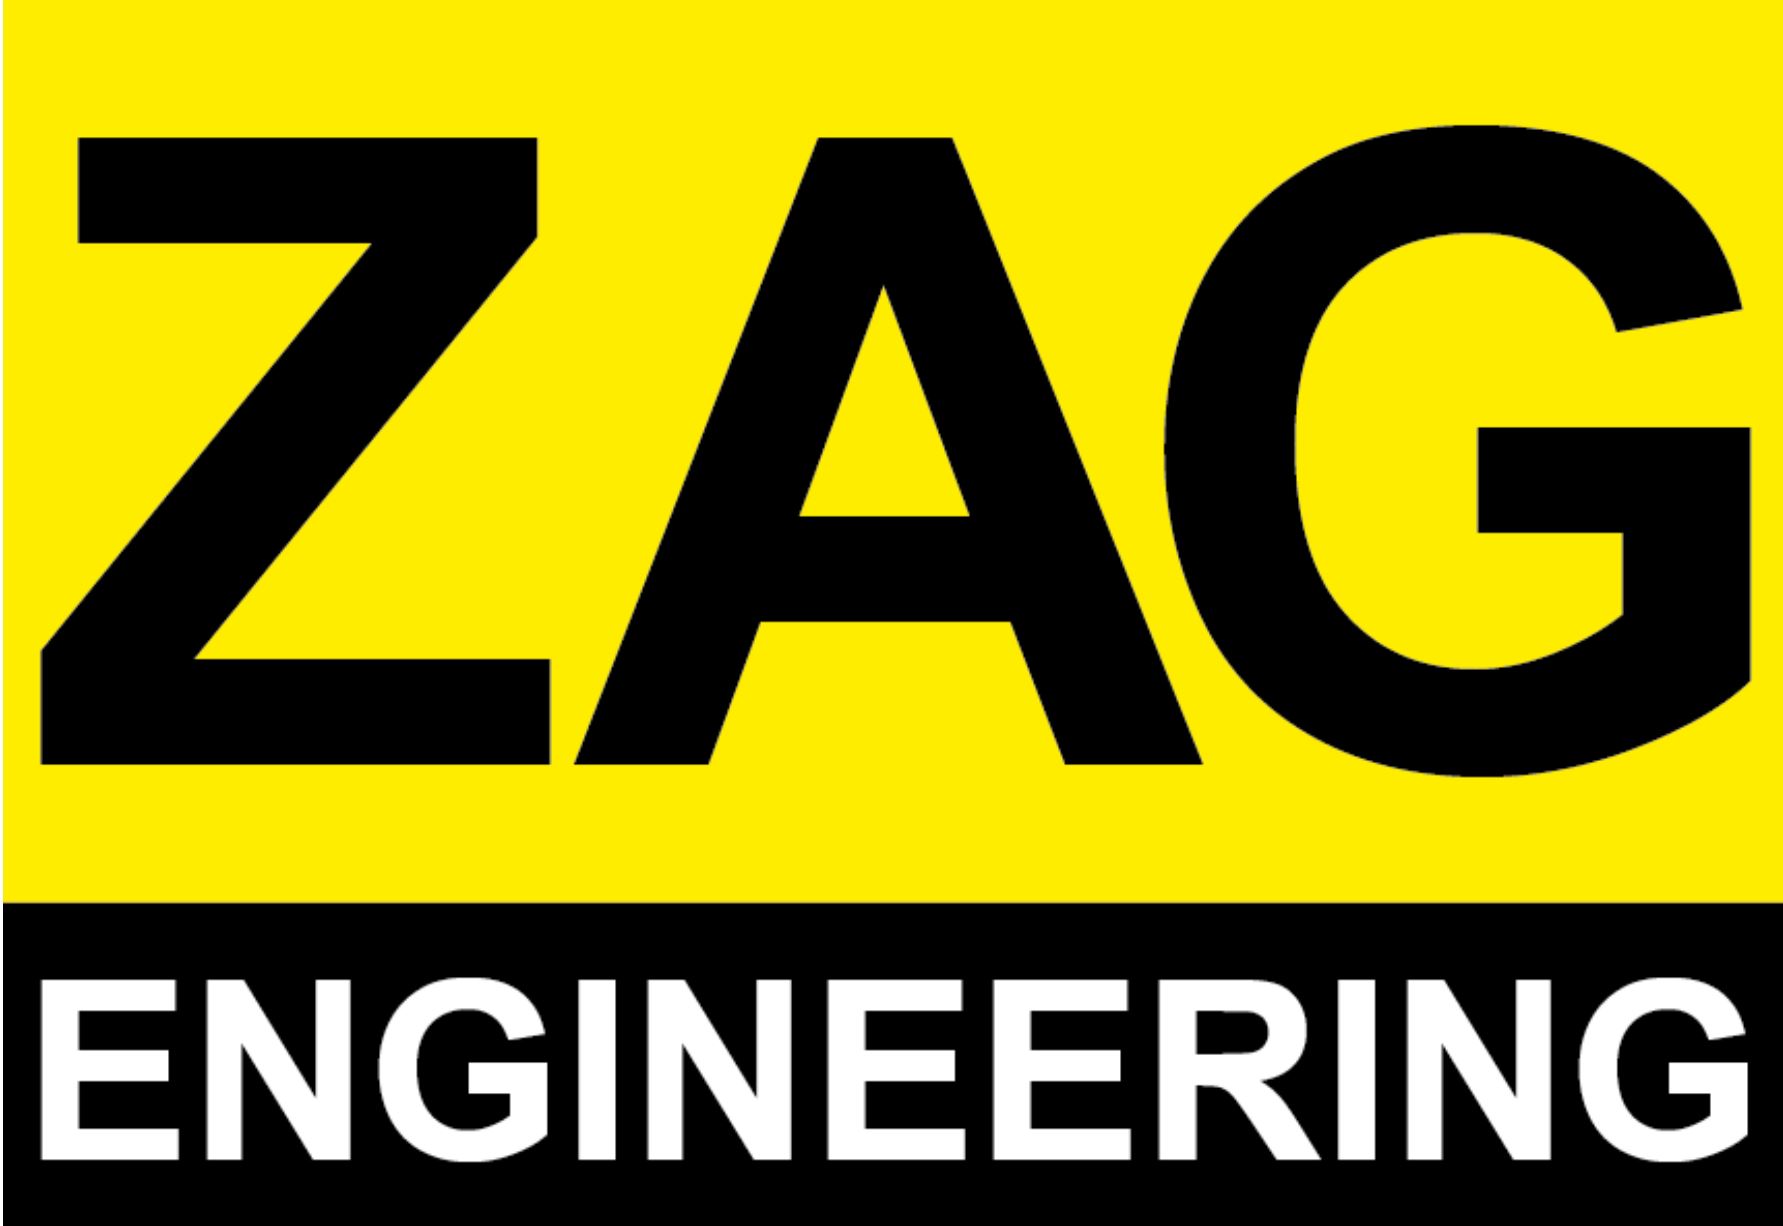 ZAG Engineering